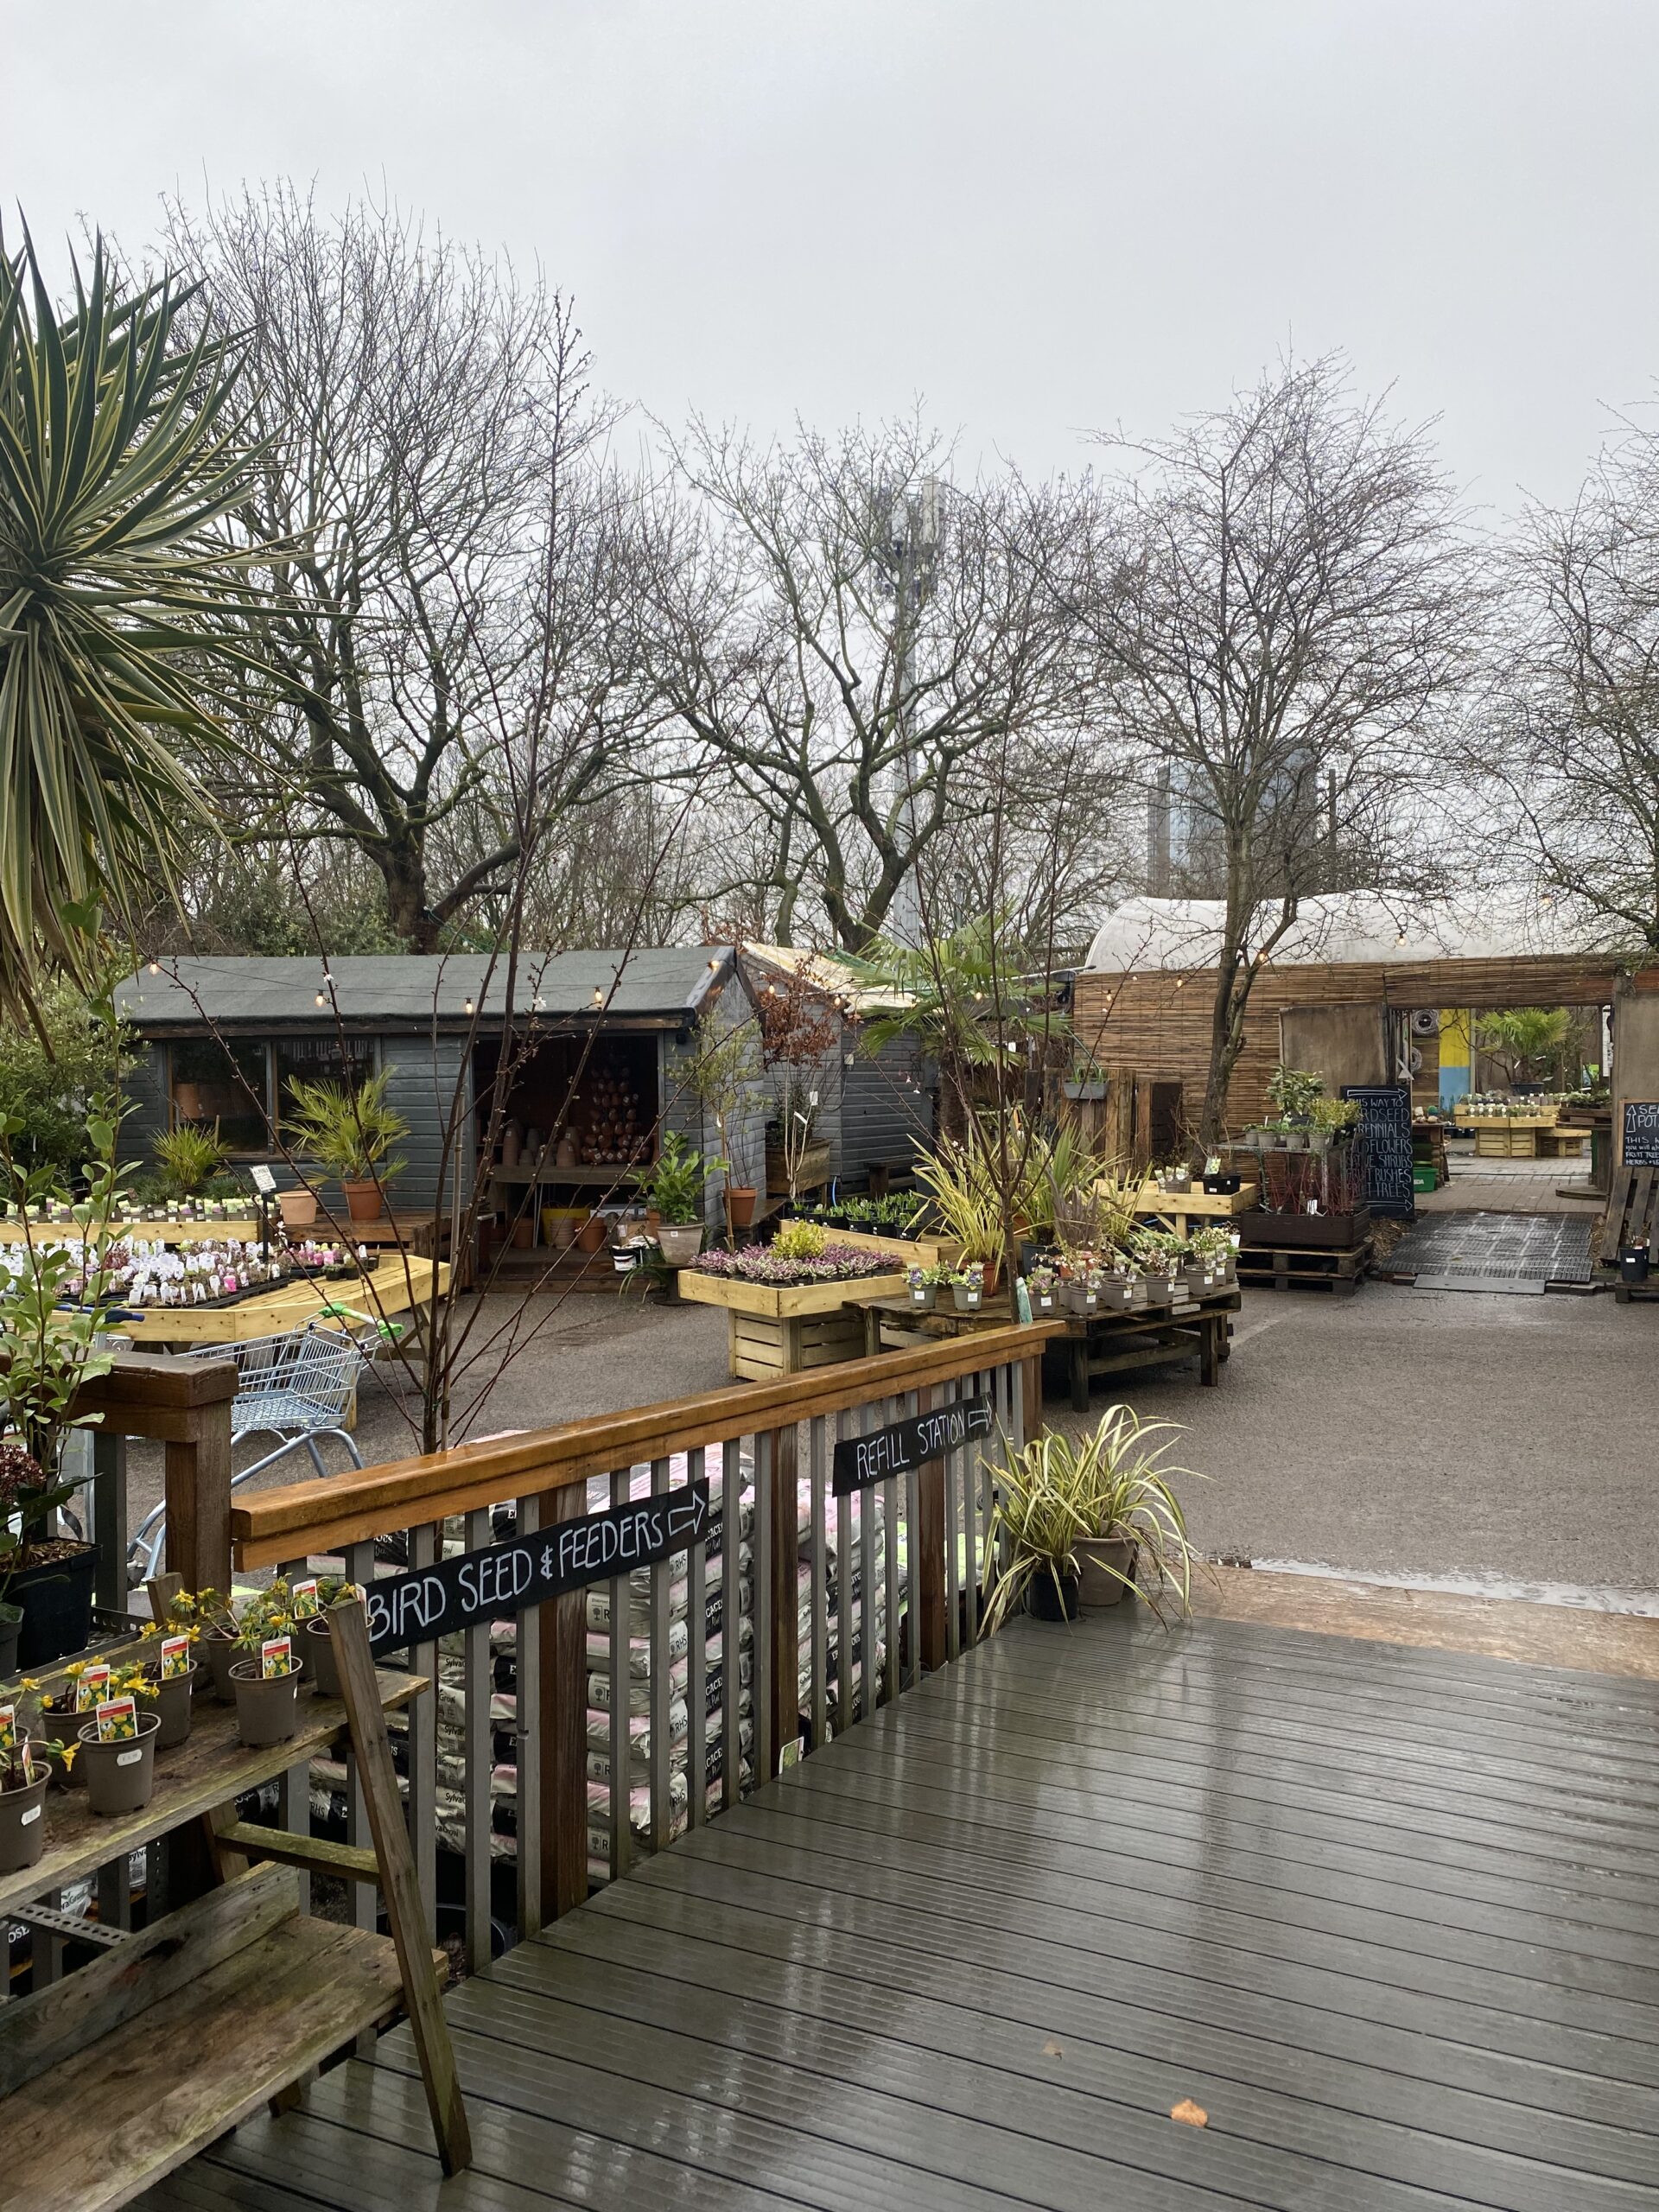 Hulme Community Garden Centre on a rainy day